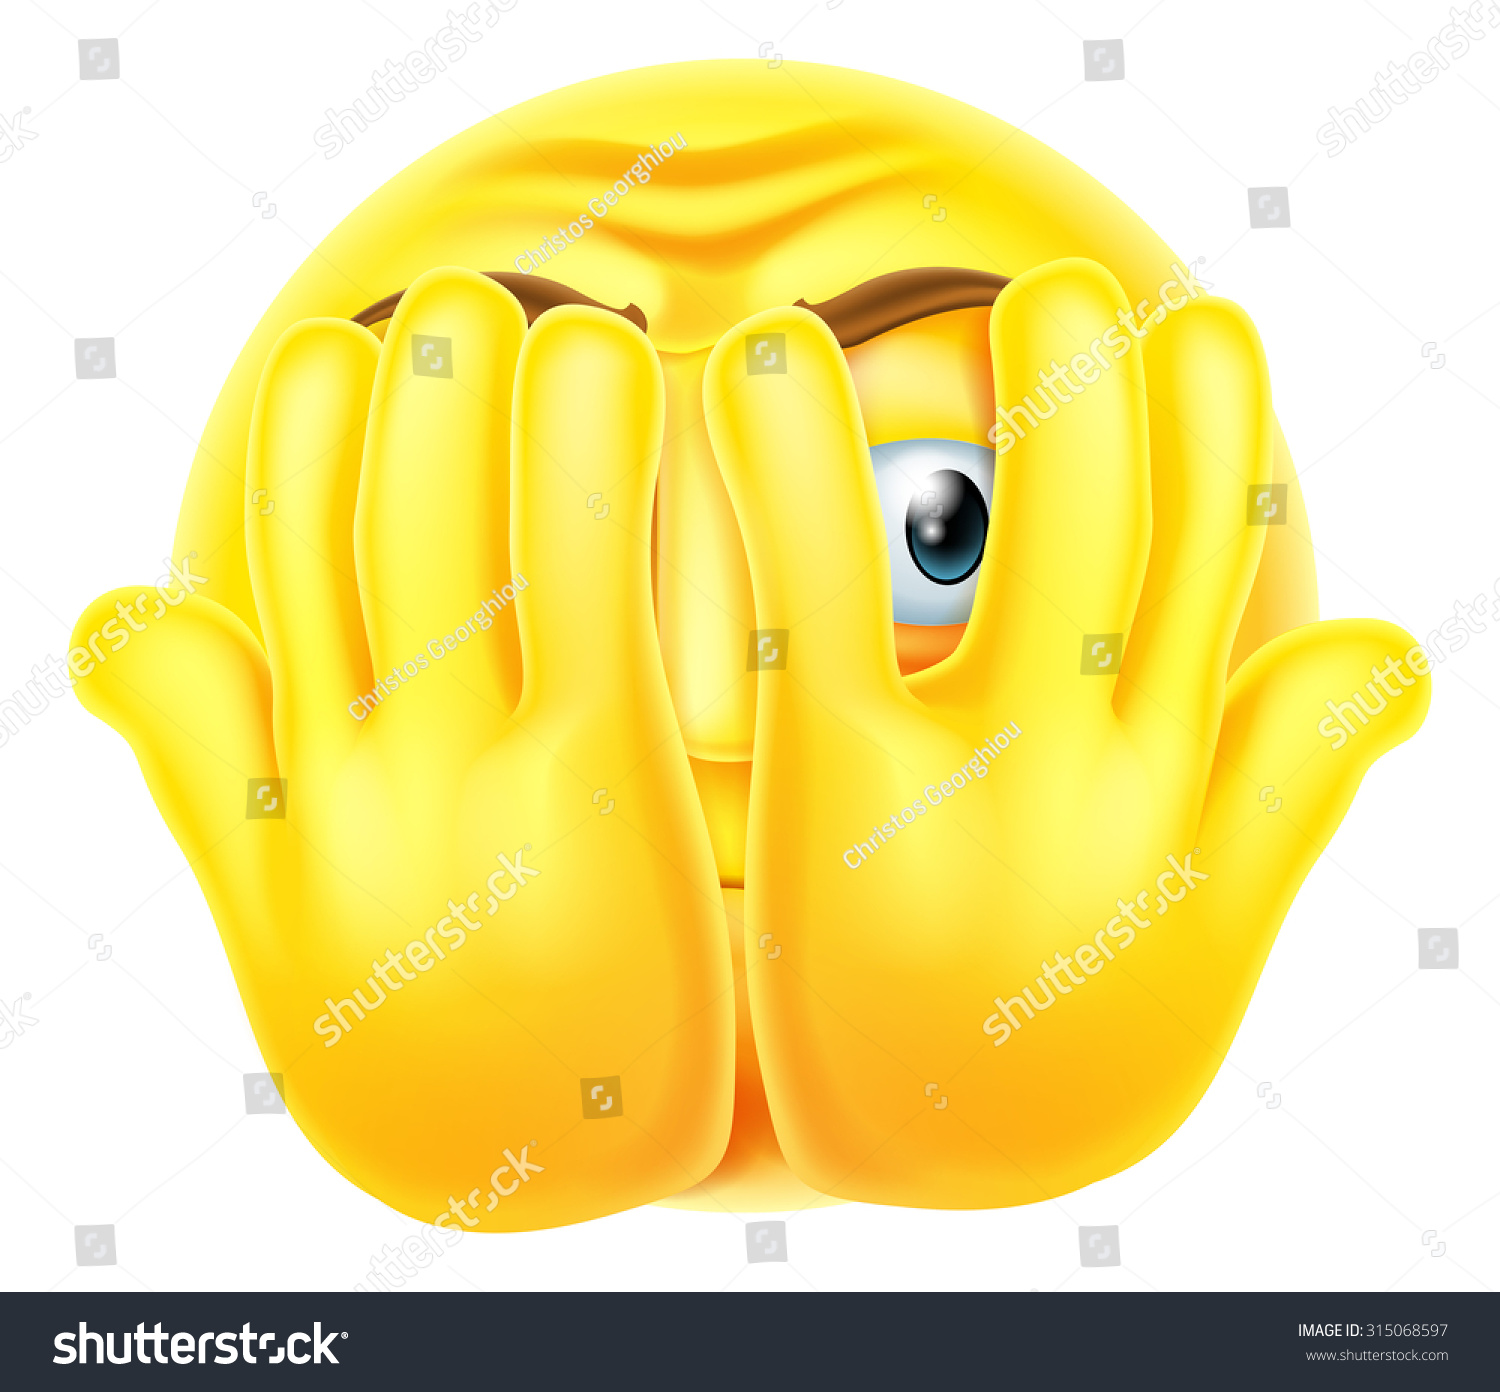 stock-vector-an-emoticon-emoji-looking-very-scared-peeking-through-and-hiding-behind-his-hands-315068597.jpg